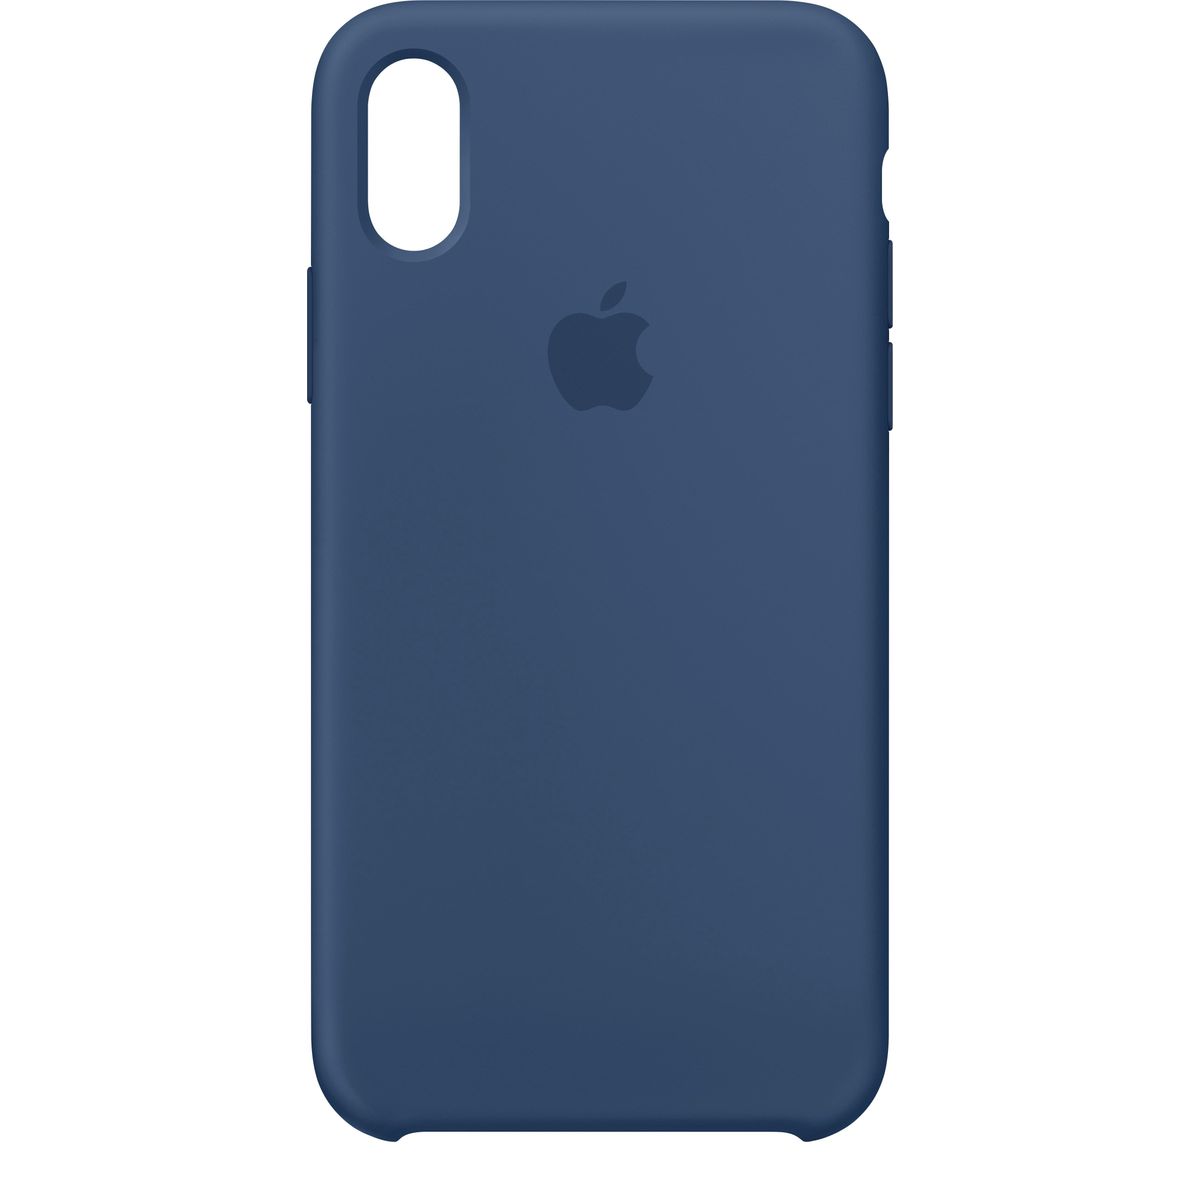 Photos - Case Apple iPhone X Silicone  - Blue Cobalt APPCASEMQT42ZMA 